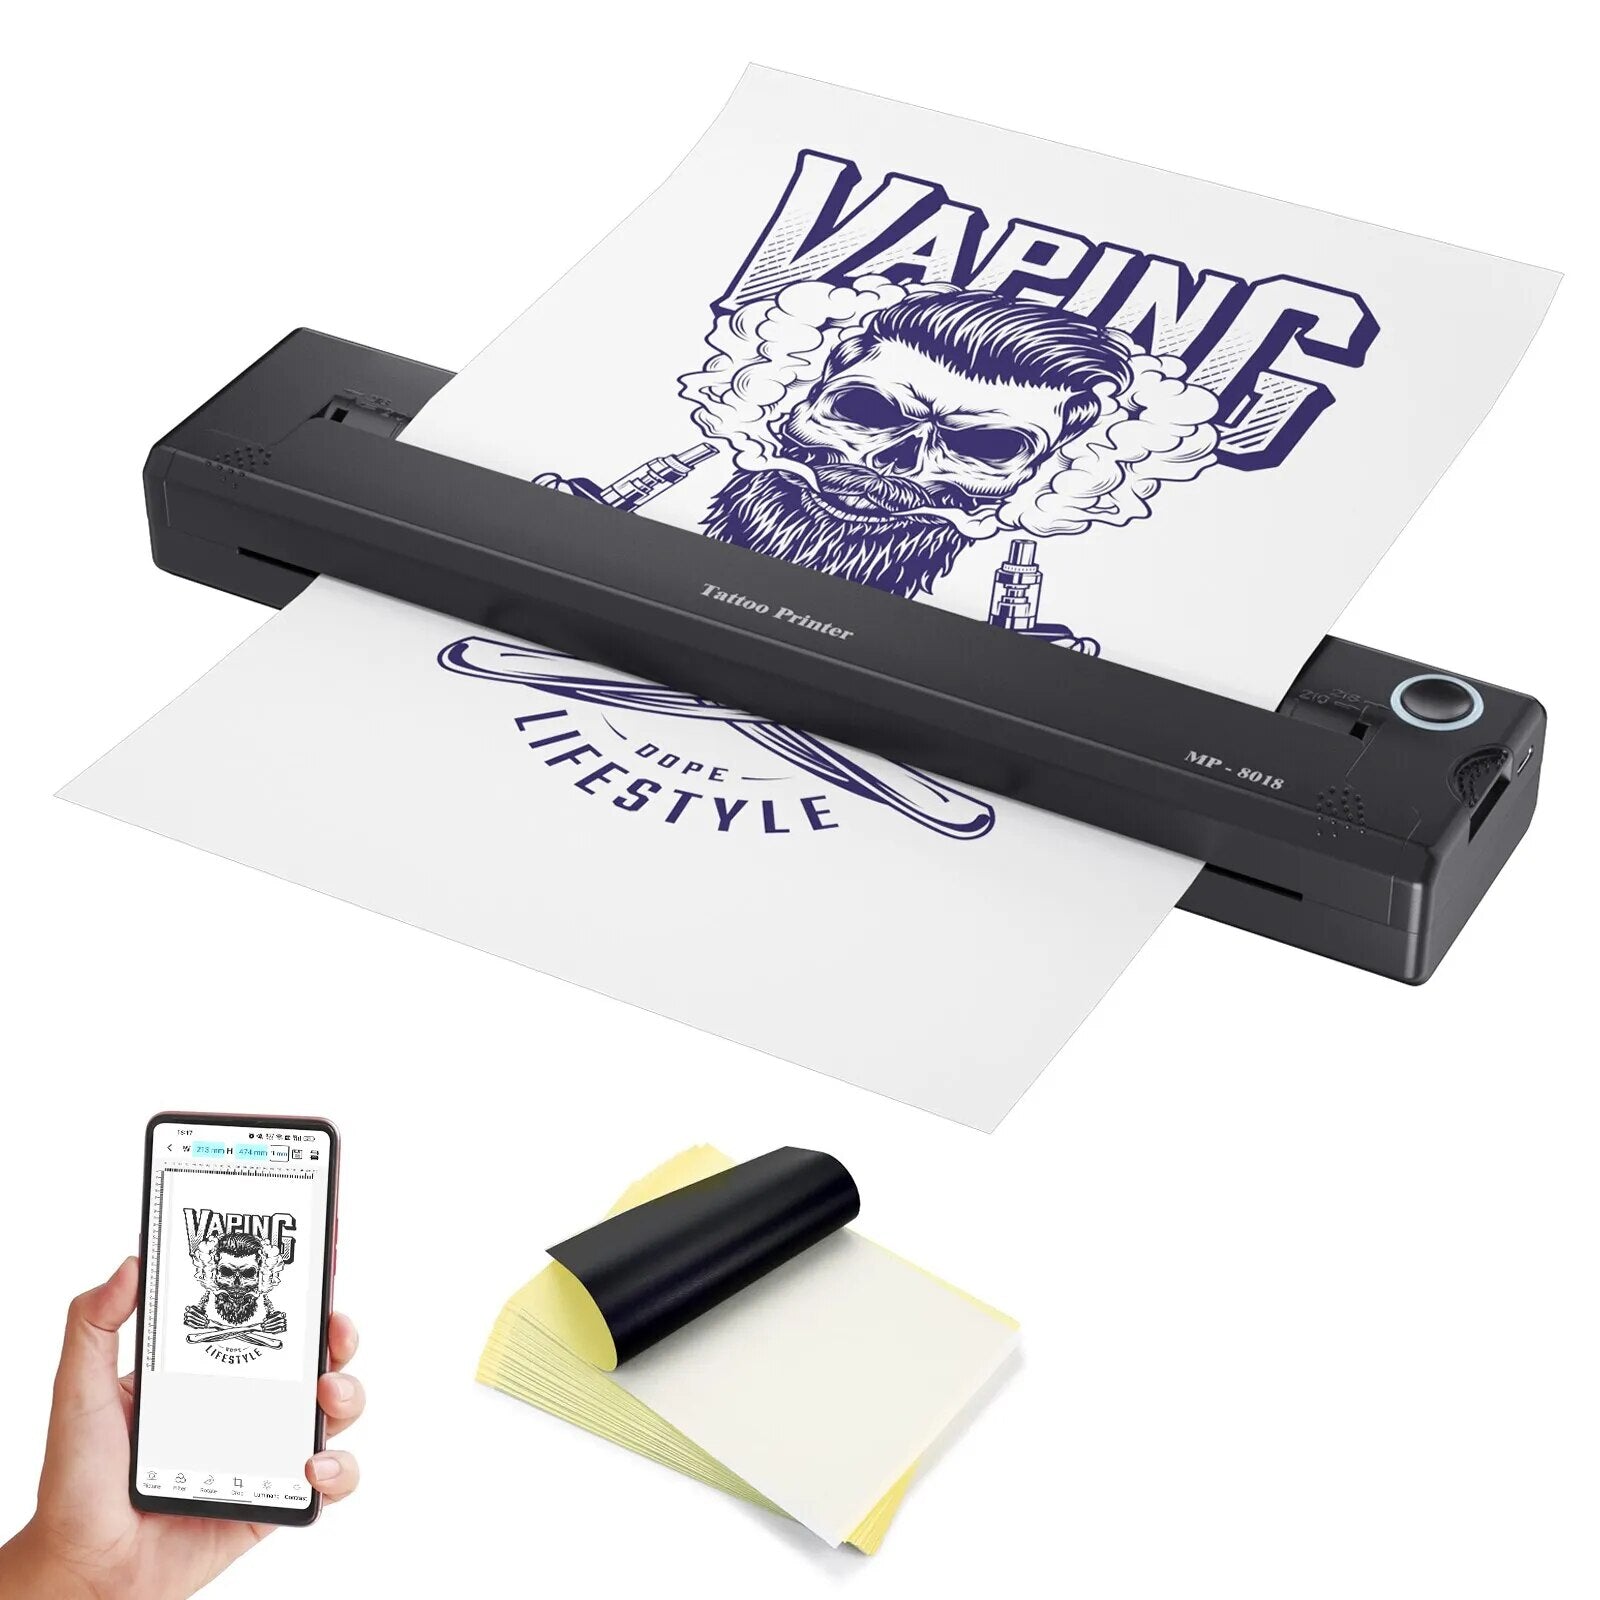 Impresora de transferencia de tatuajes portátil, miniplantilla térmica de red inalámbrica, copiadora de impresión de dibujo de línea